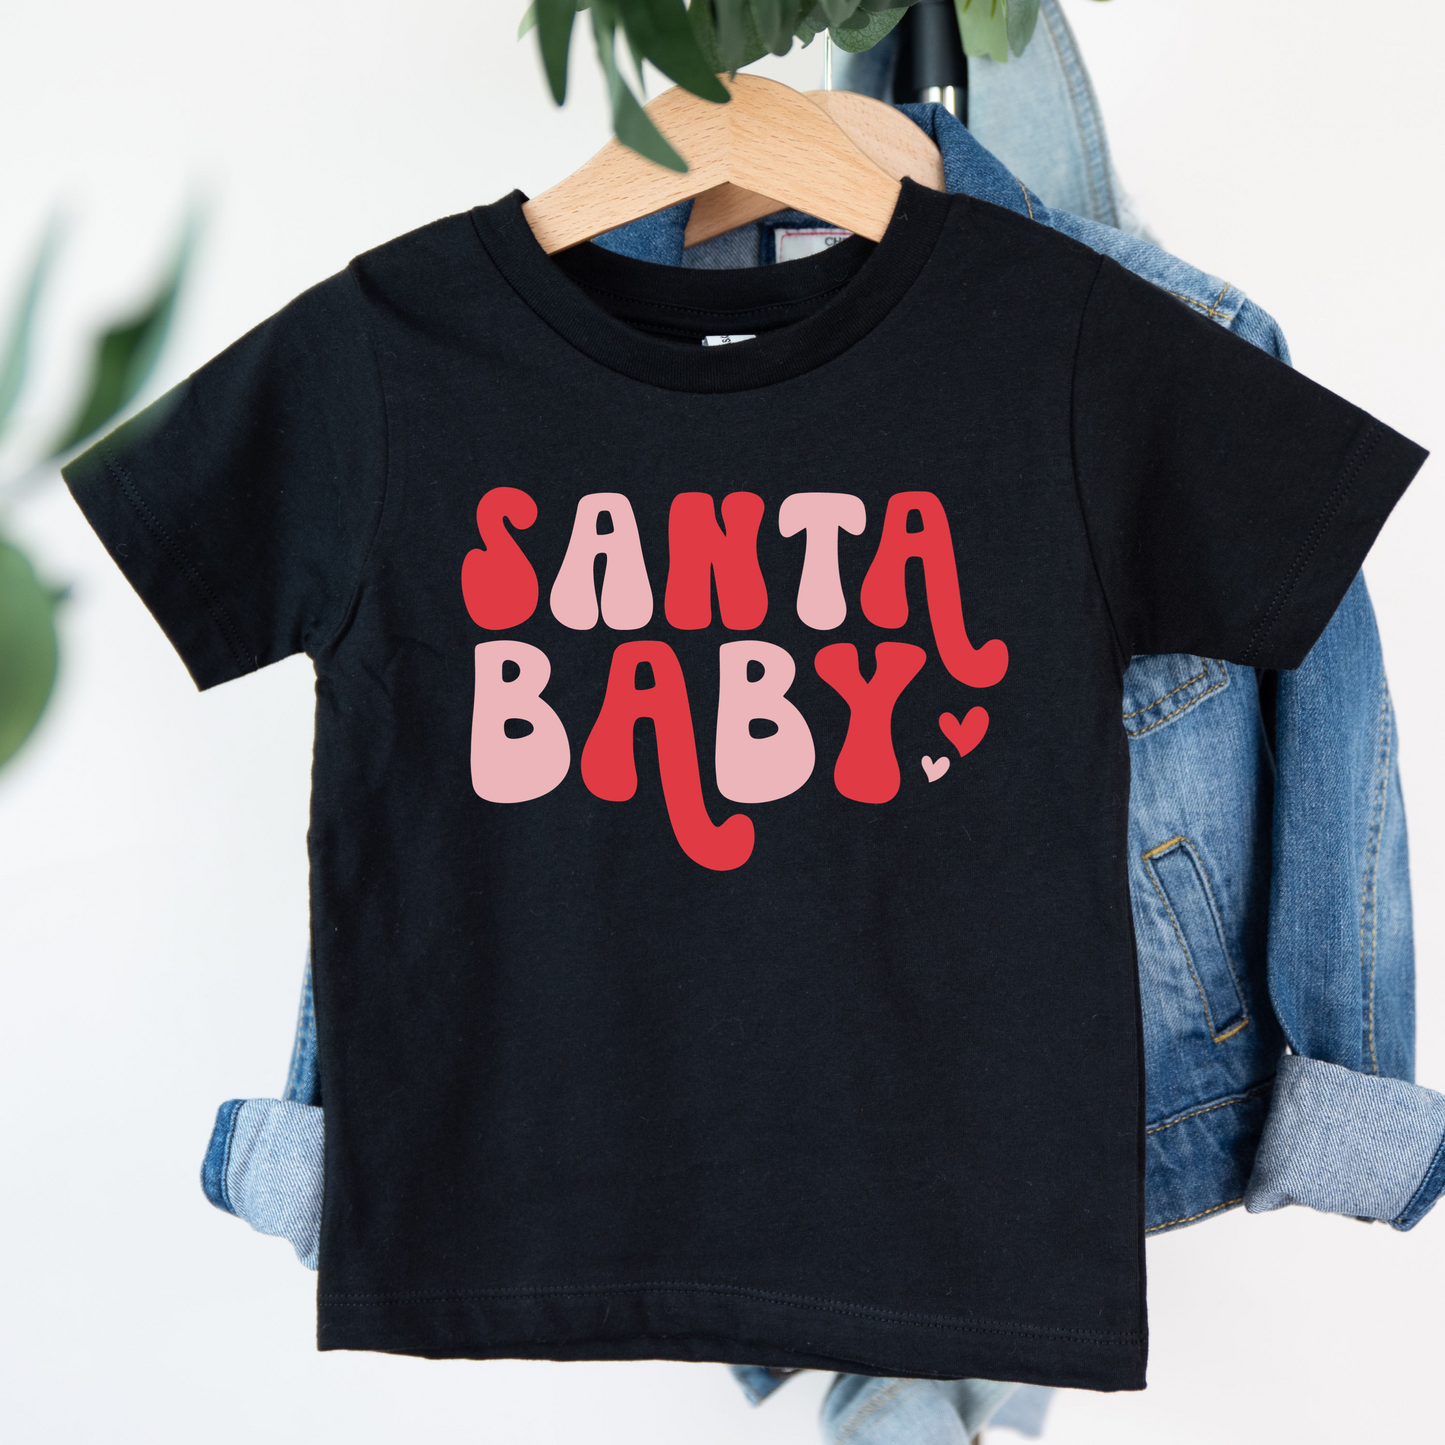 Santa baby kids Christmas t shirts